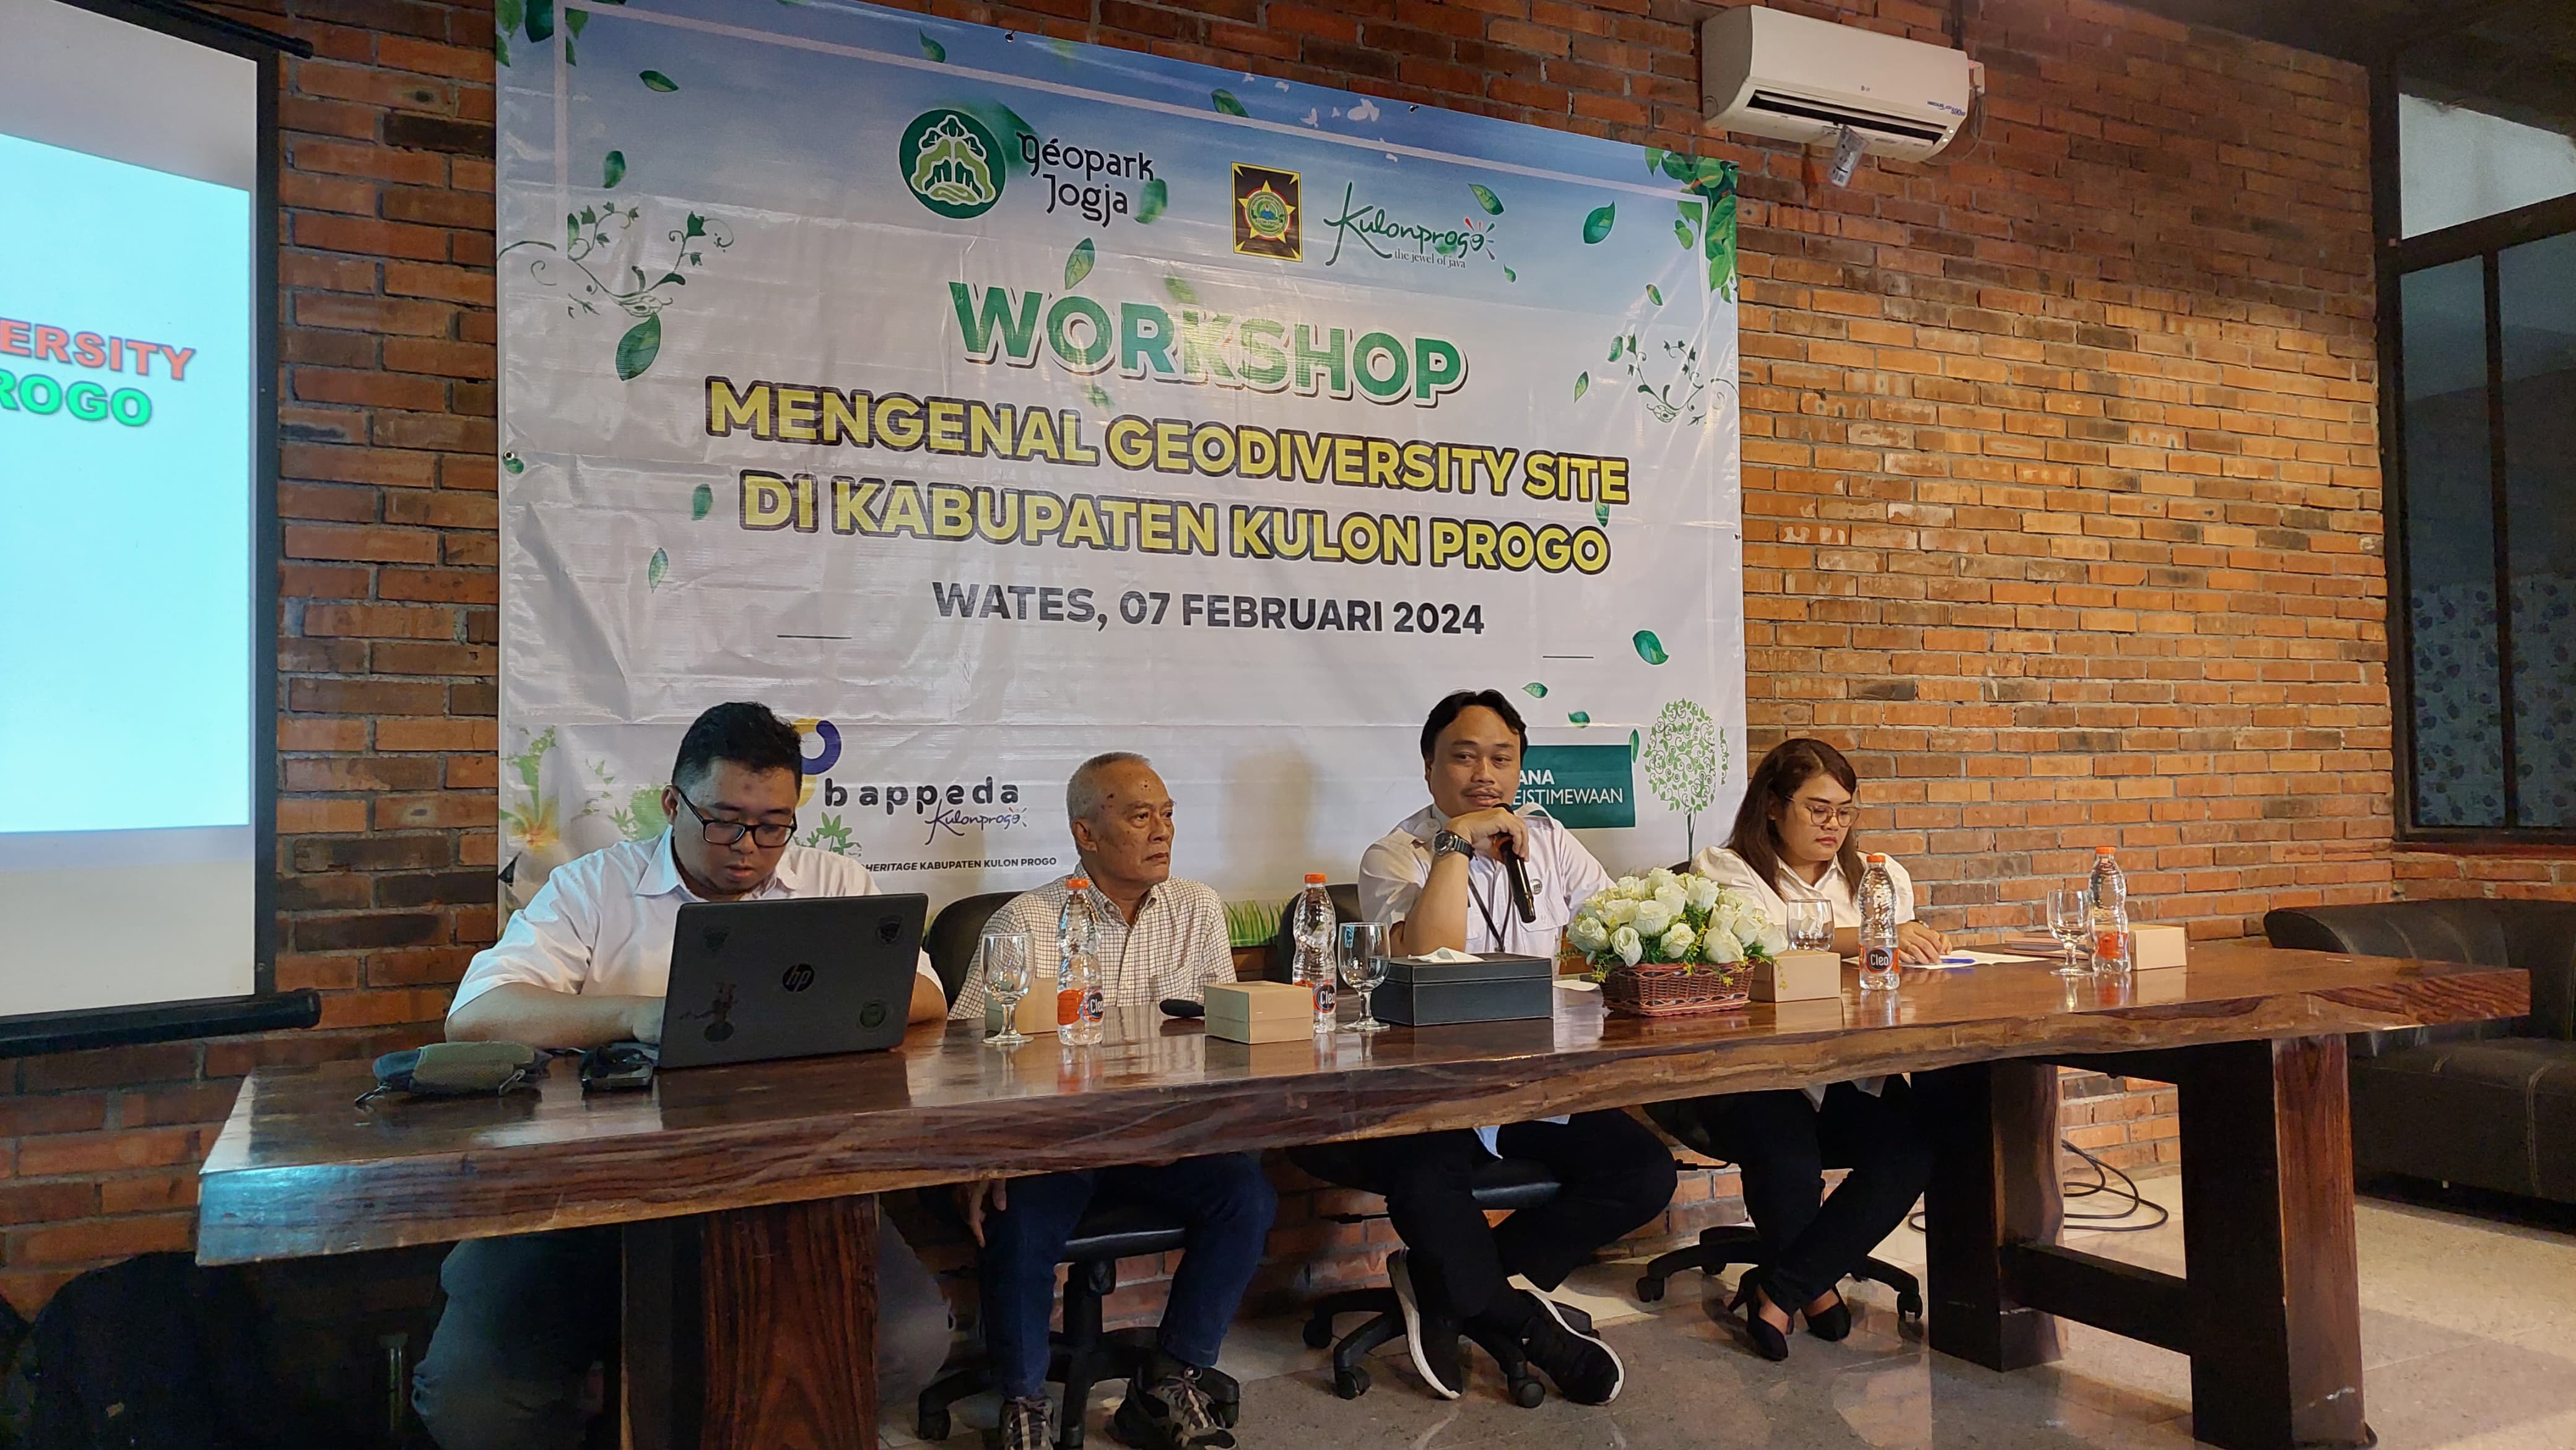 Mengenal Geopark Jogja: Workshop Mengenai Geodiversity Site di Kabupaten Kulon Progo image